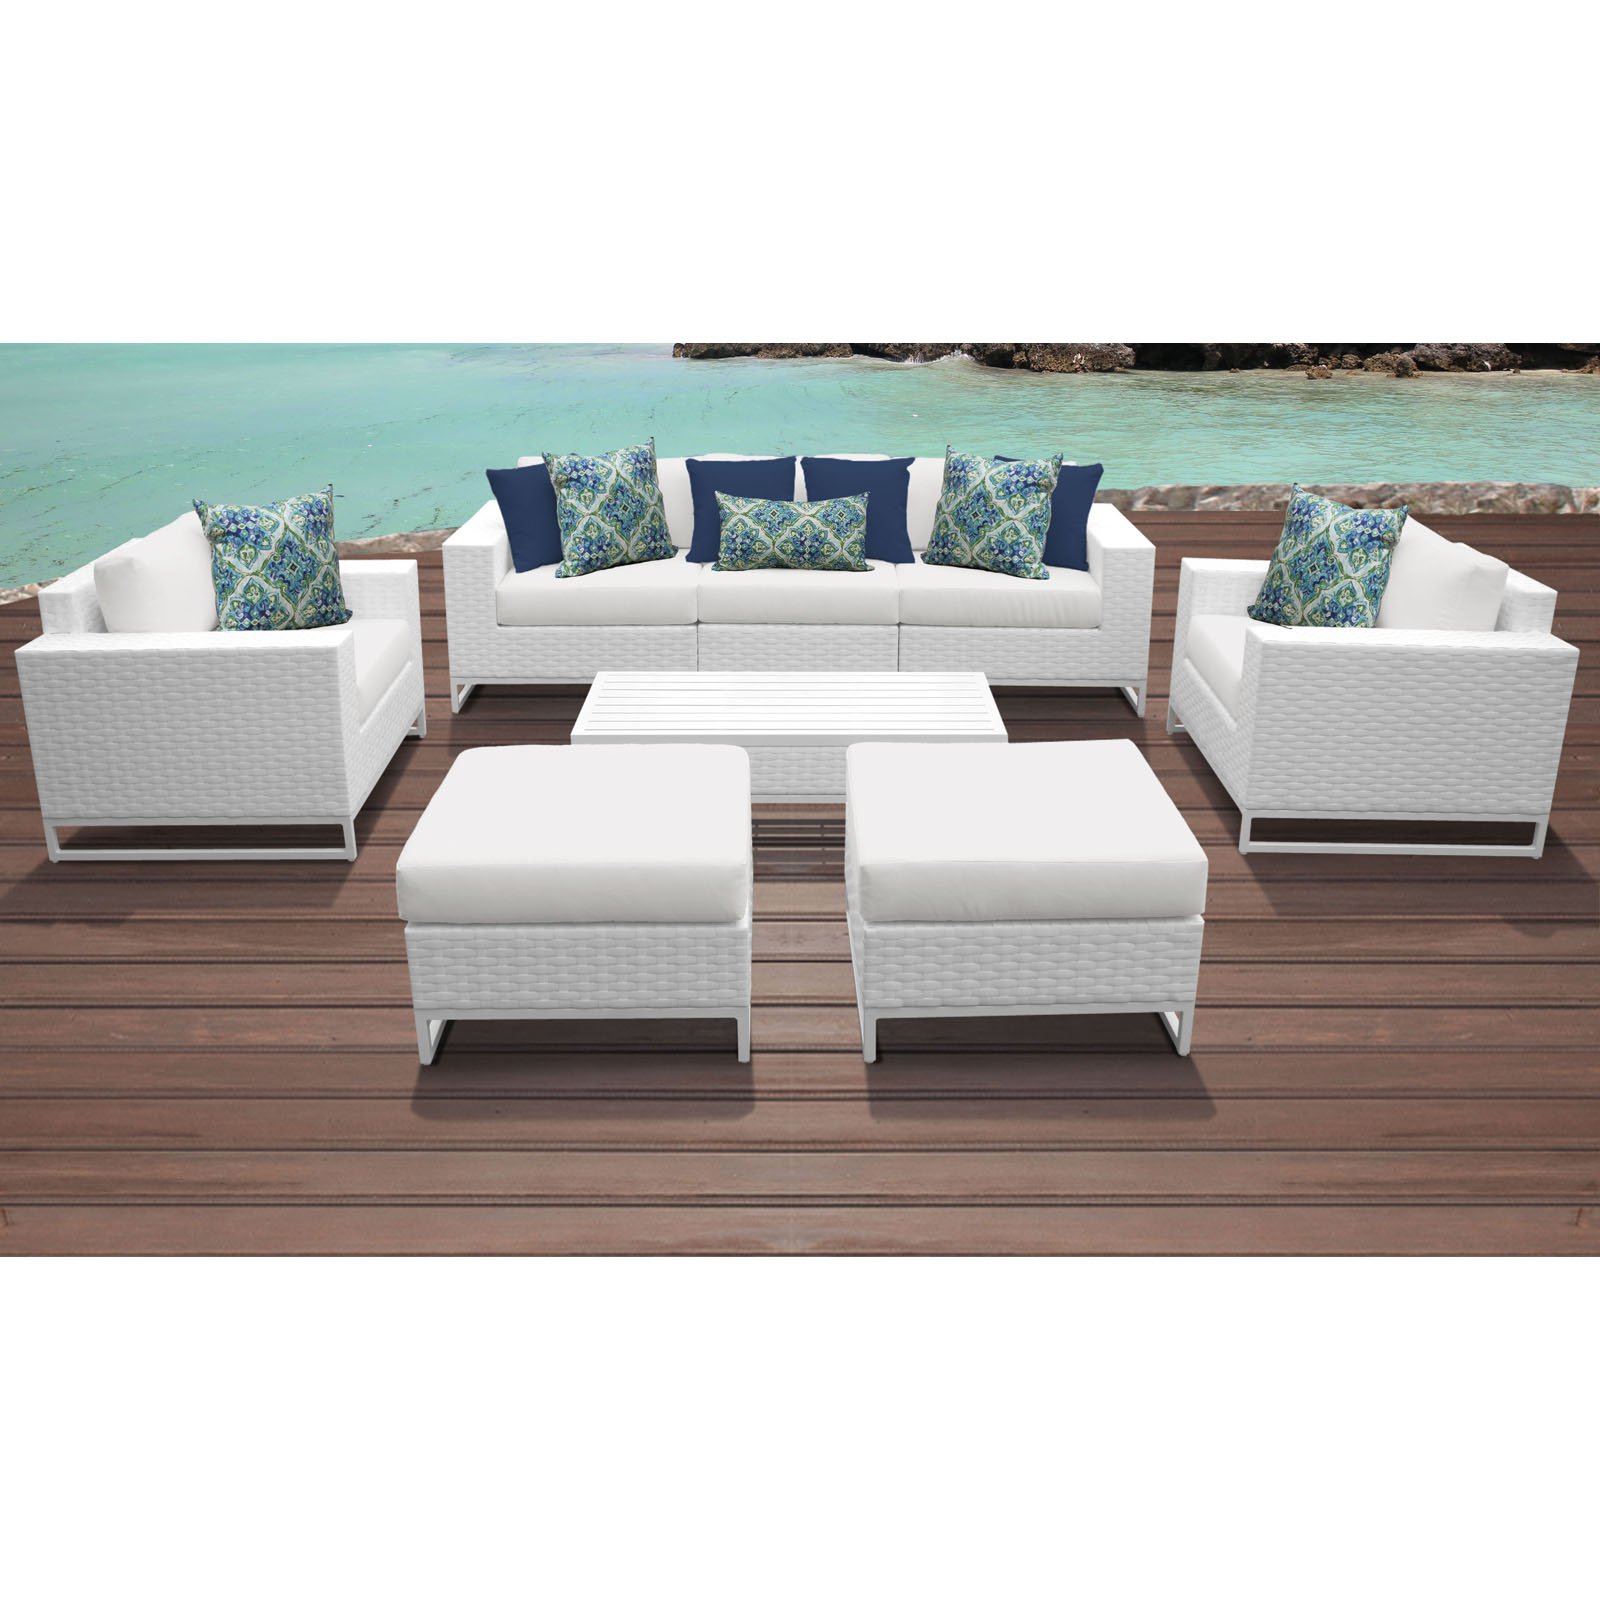 TK Classics Miami 8 Piece Outdoor Wicker Patio Furniture Set 08a - image 3 of 3